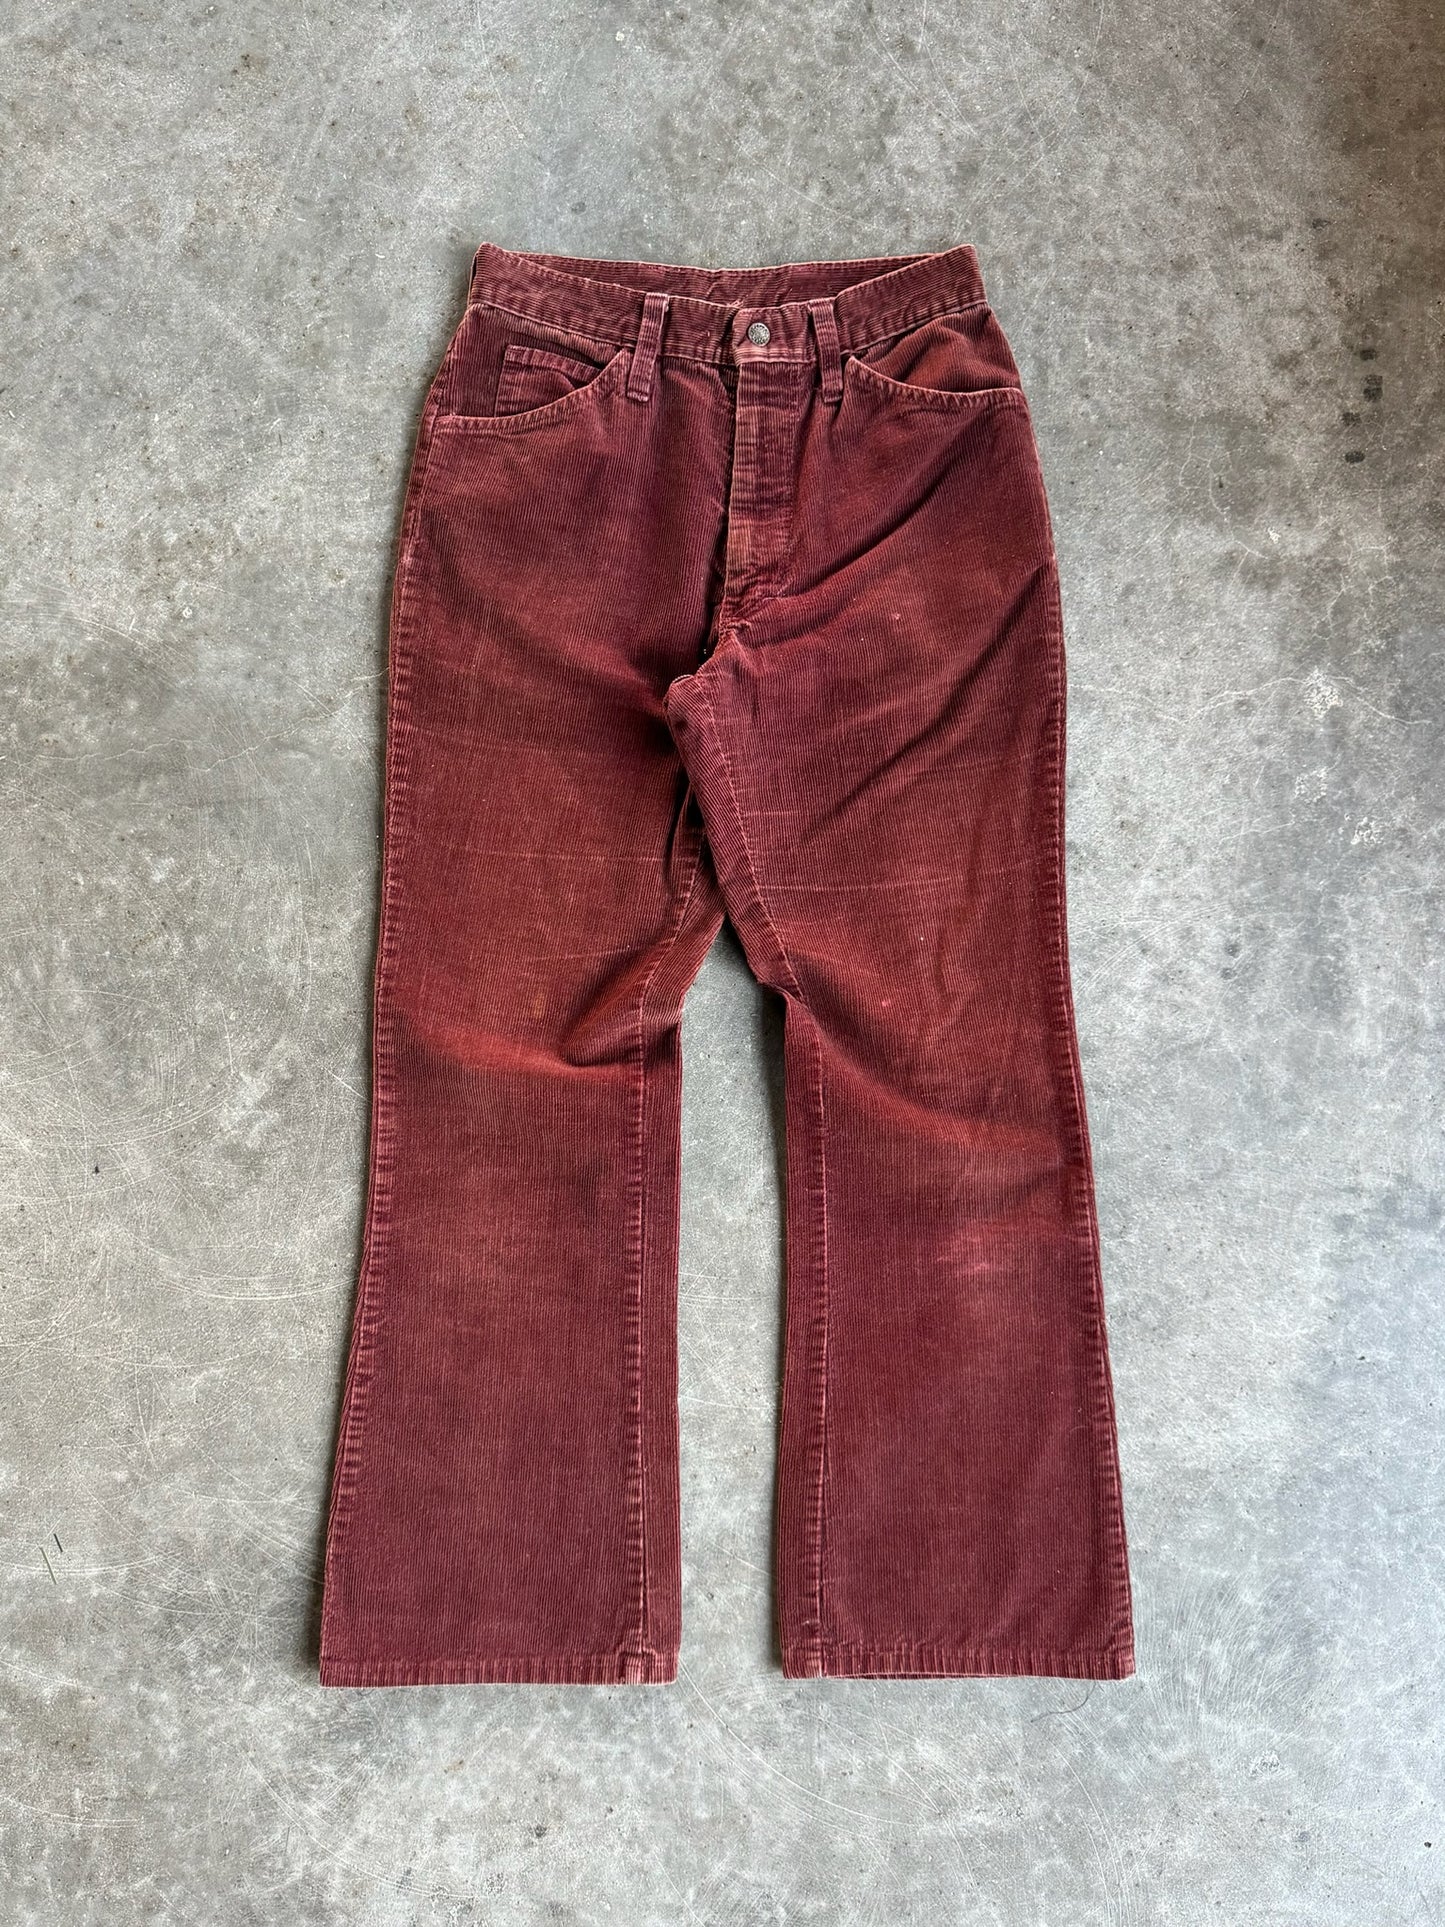 Vintage Flared Corduroy Pants - 26X27